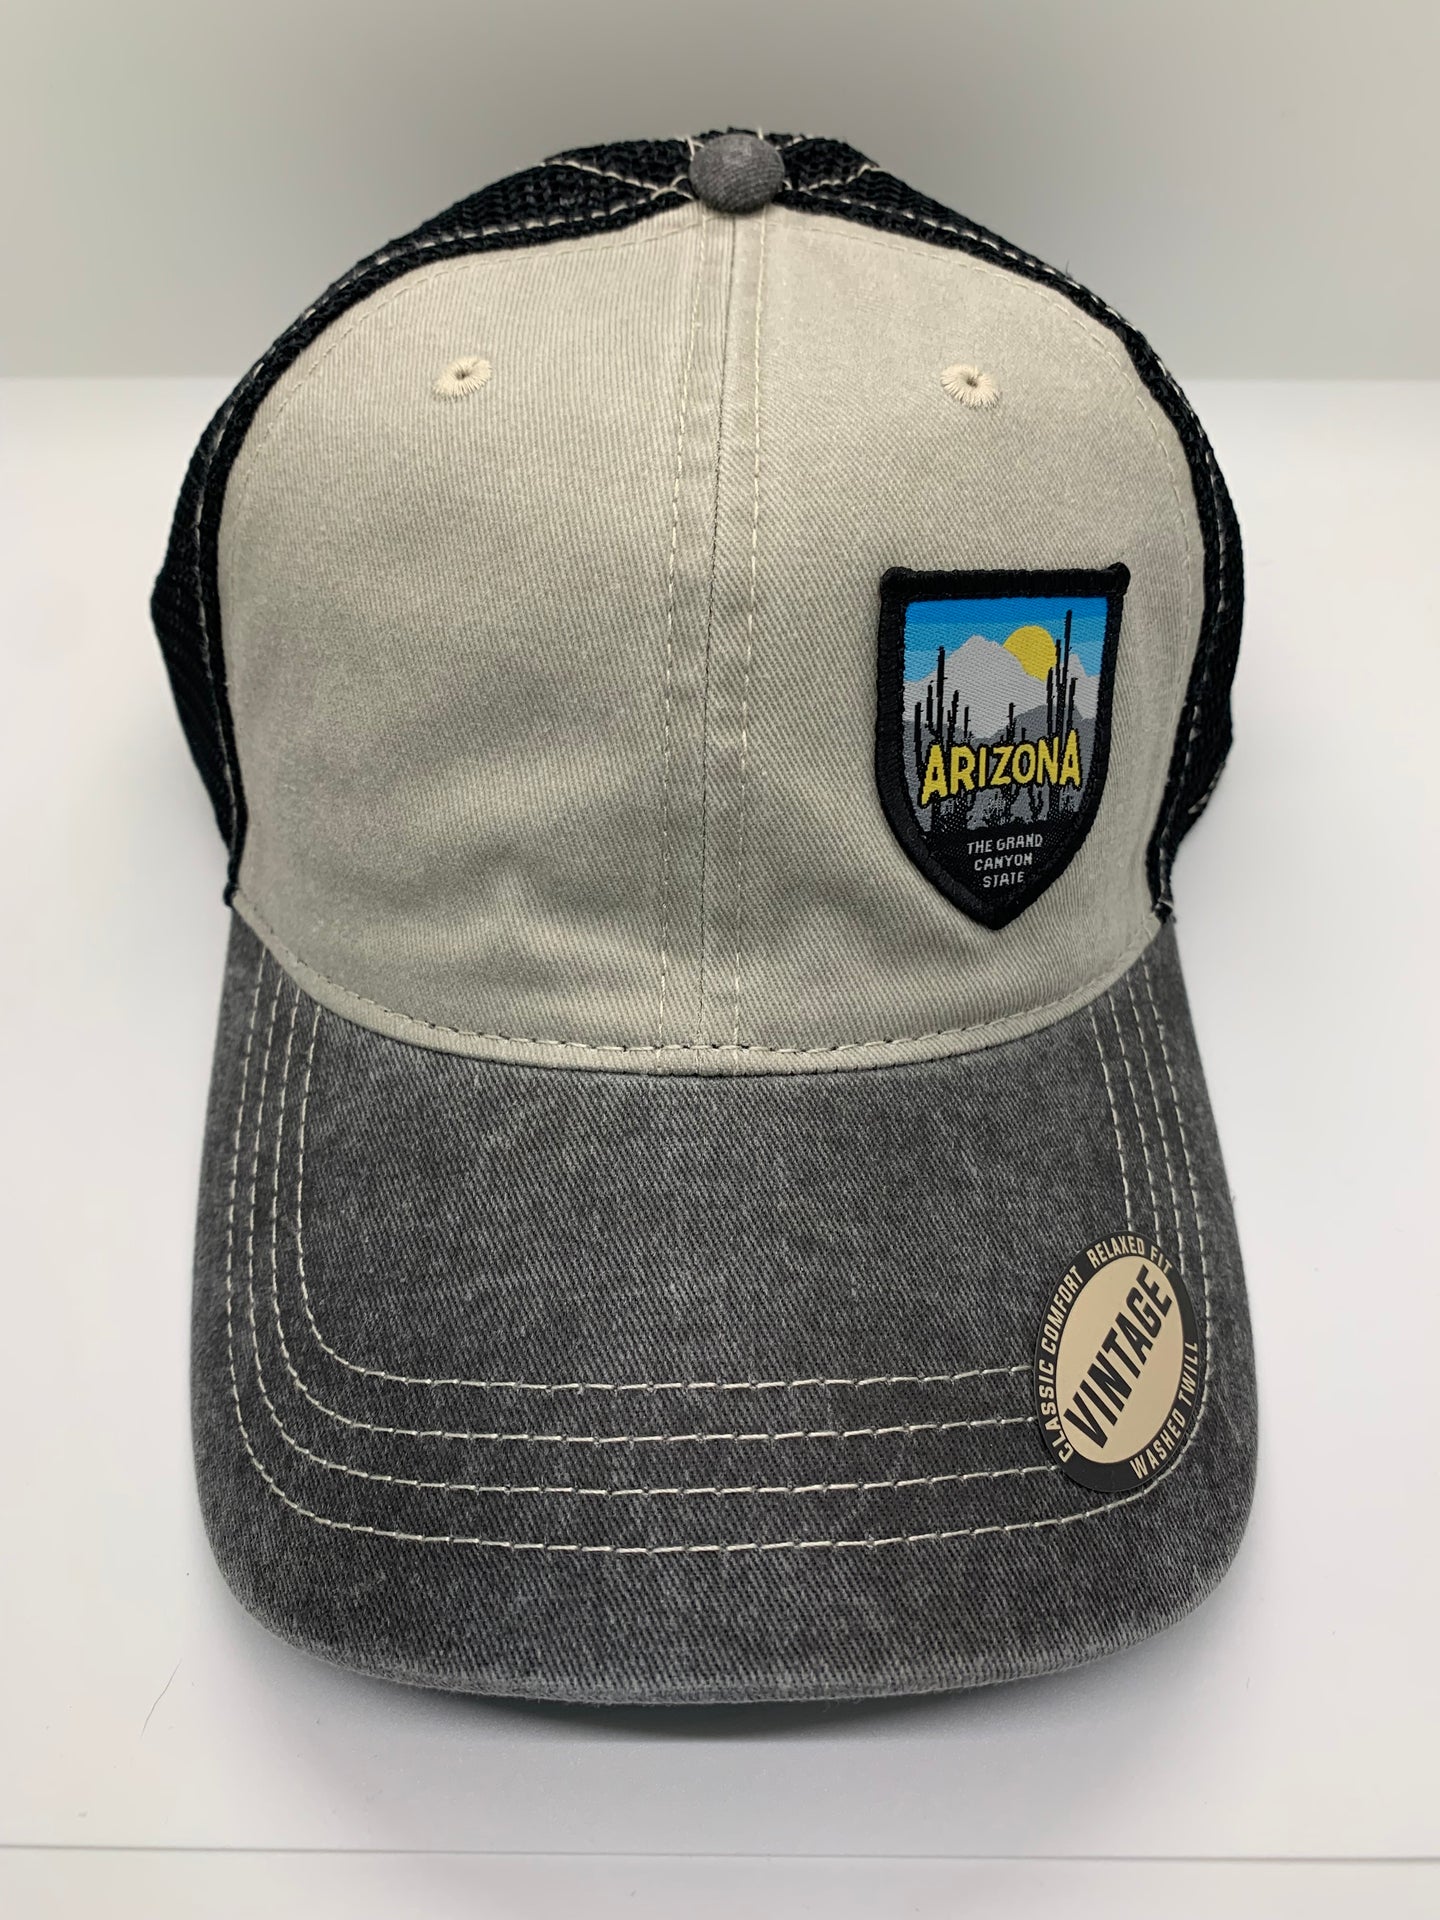 G54 Vintage Gray and Black Arizona Trucker Hat